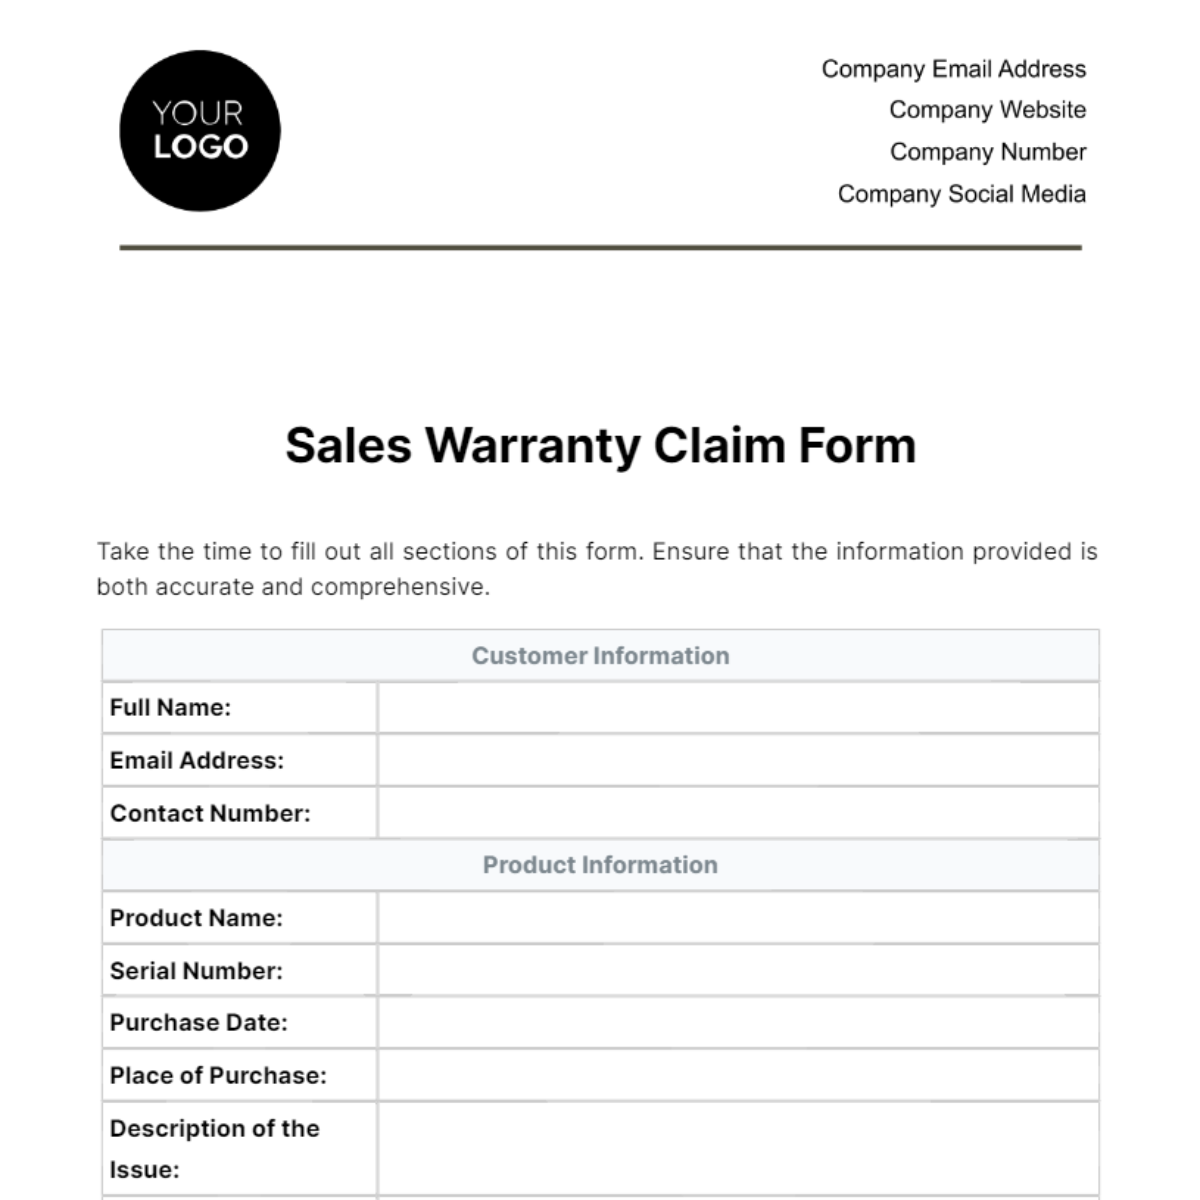 Free Sales Warranty Claim Form Template